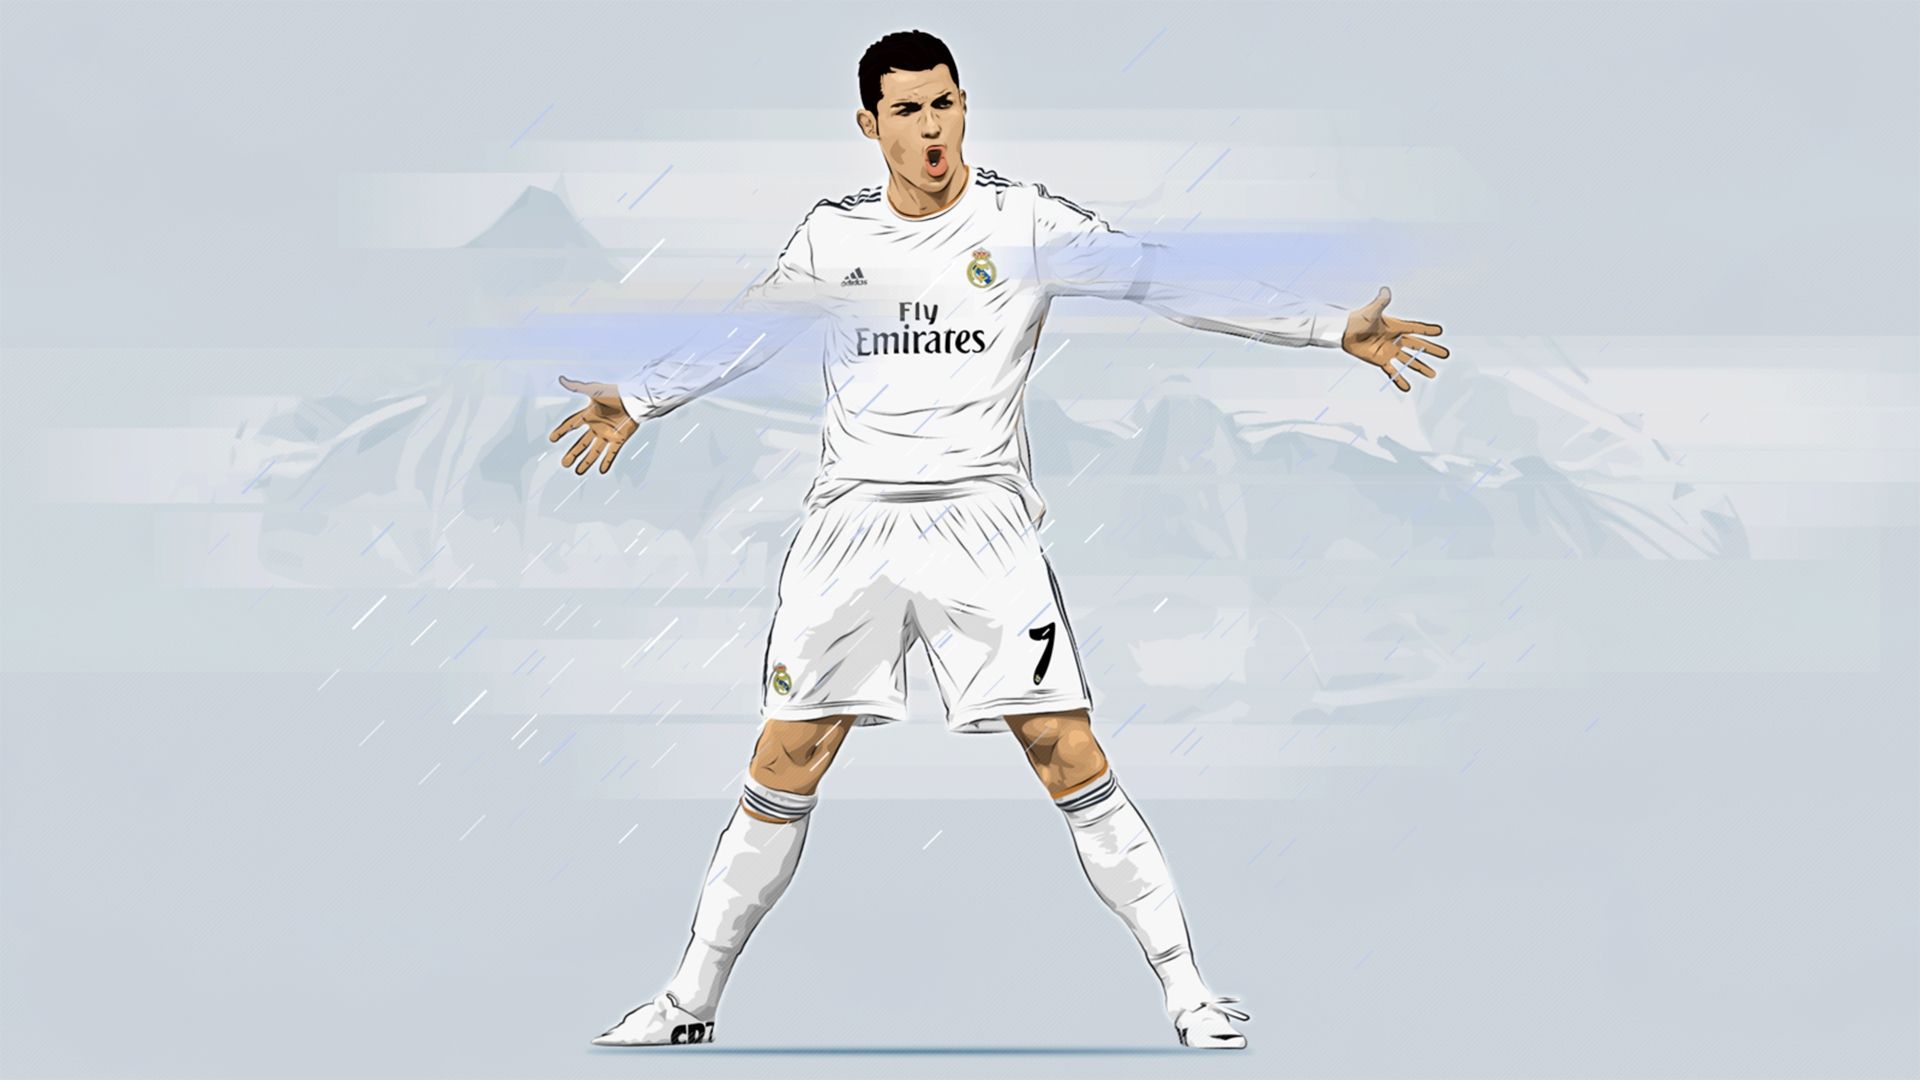 Ronaldo and Messi Wallpapers - Top 15 Best Ronaldo and Messi Wallpapers  Download